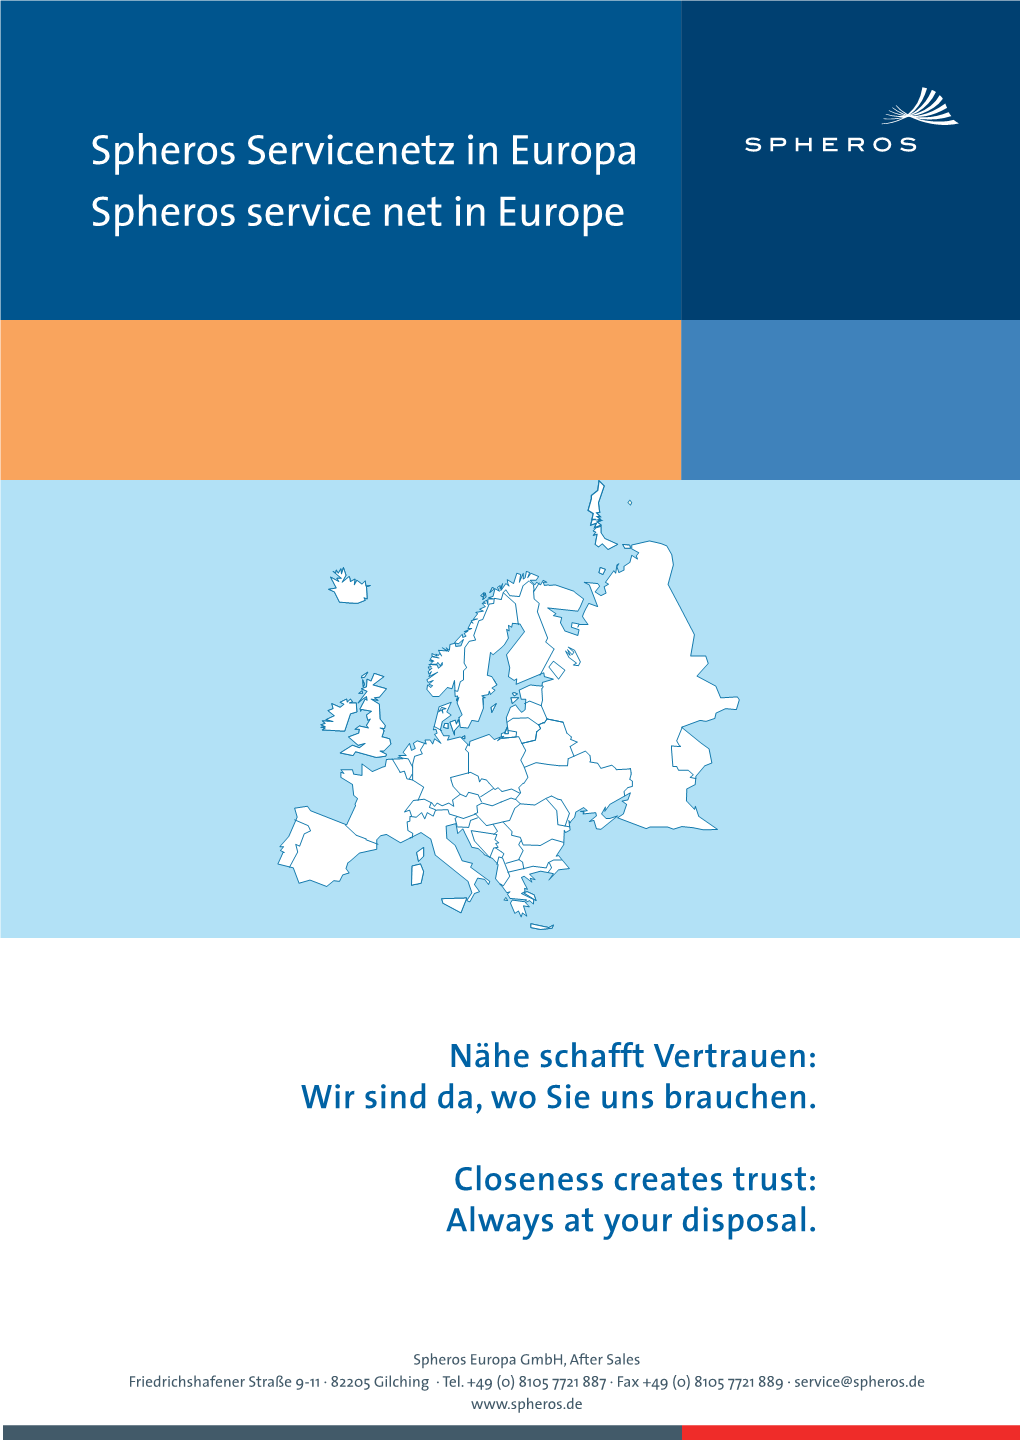 Spheros Servicenetz in Europa Spheros Service Net in Europe